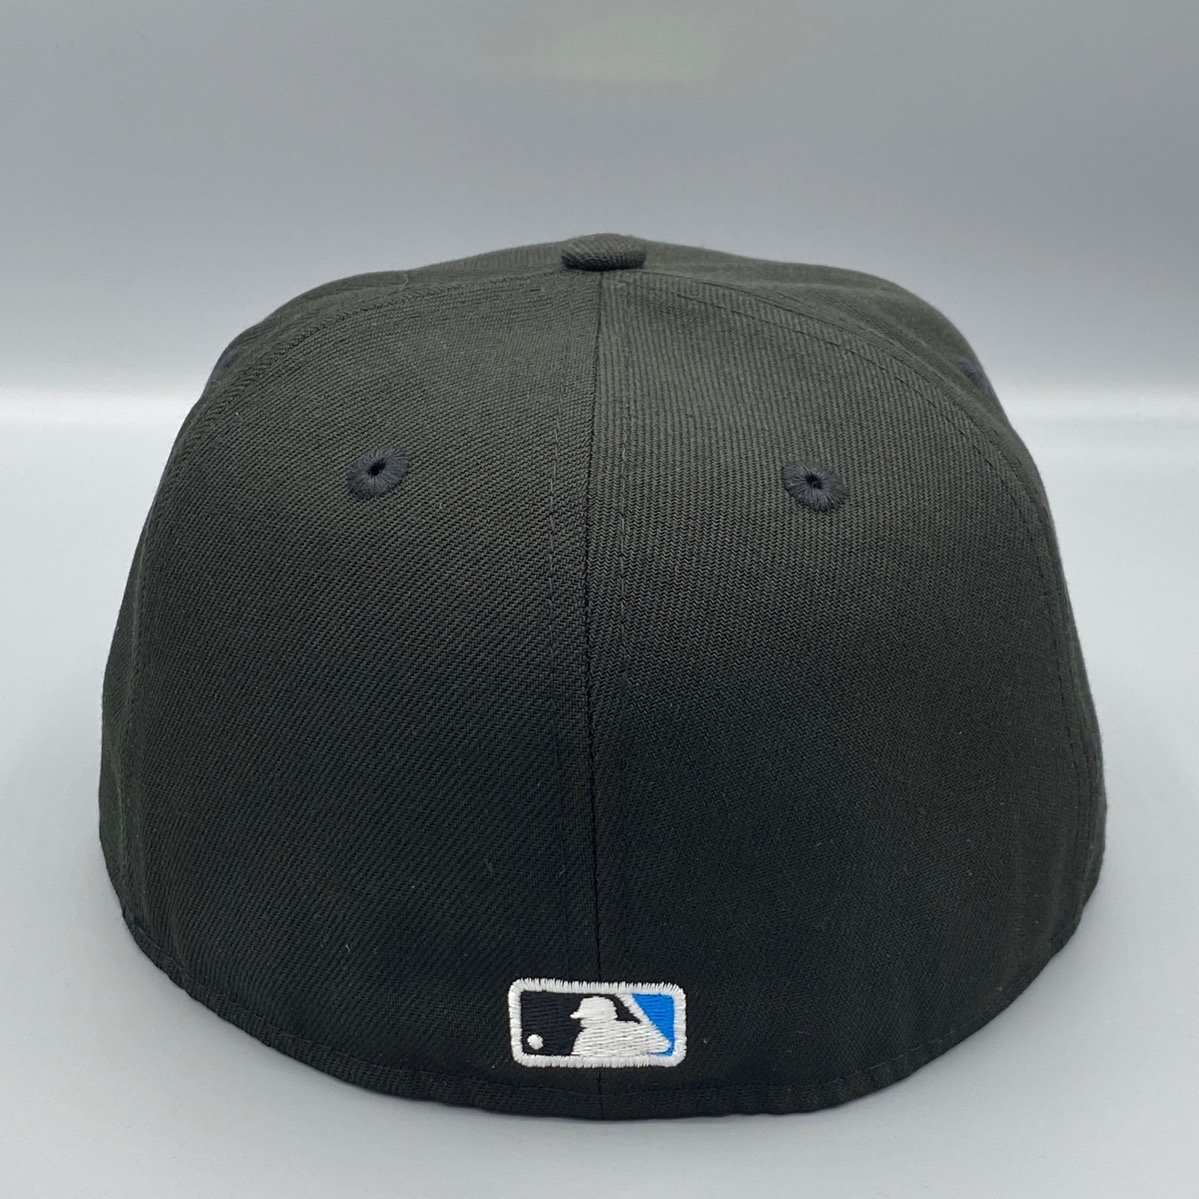  New Era 59Fifty Hat MLB Basic Toronto Blue Jays Black/White  Fitted Baseball Cap (7 3/4) : Sports & Outdoors